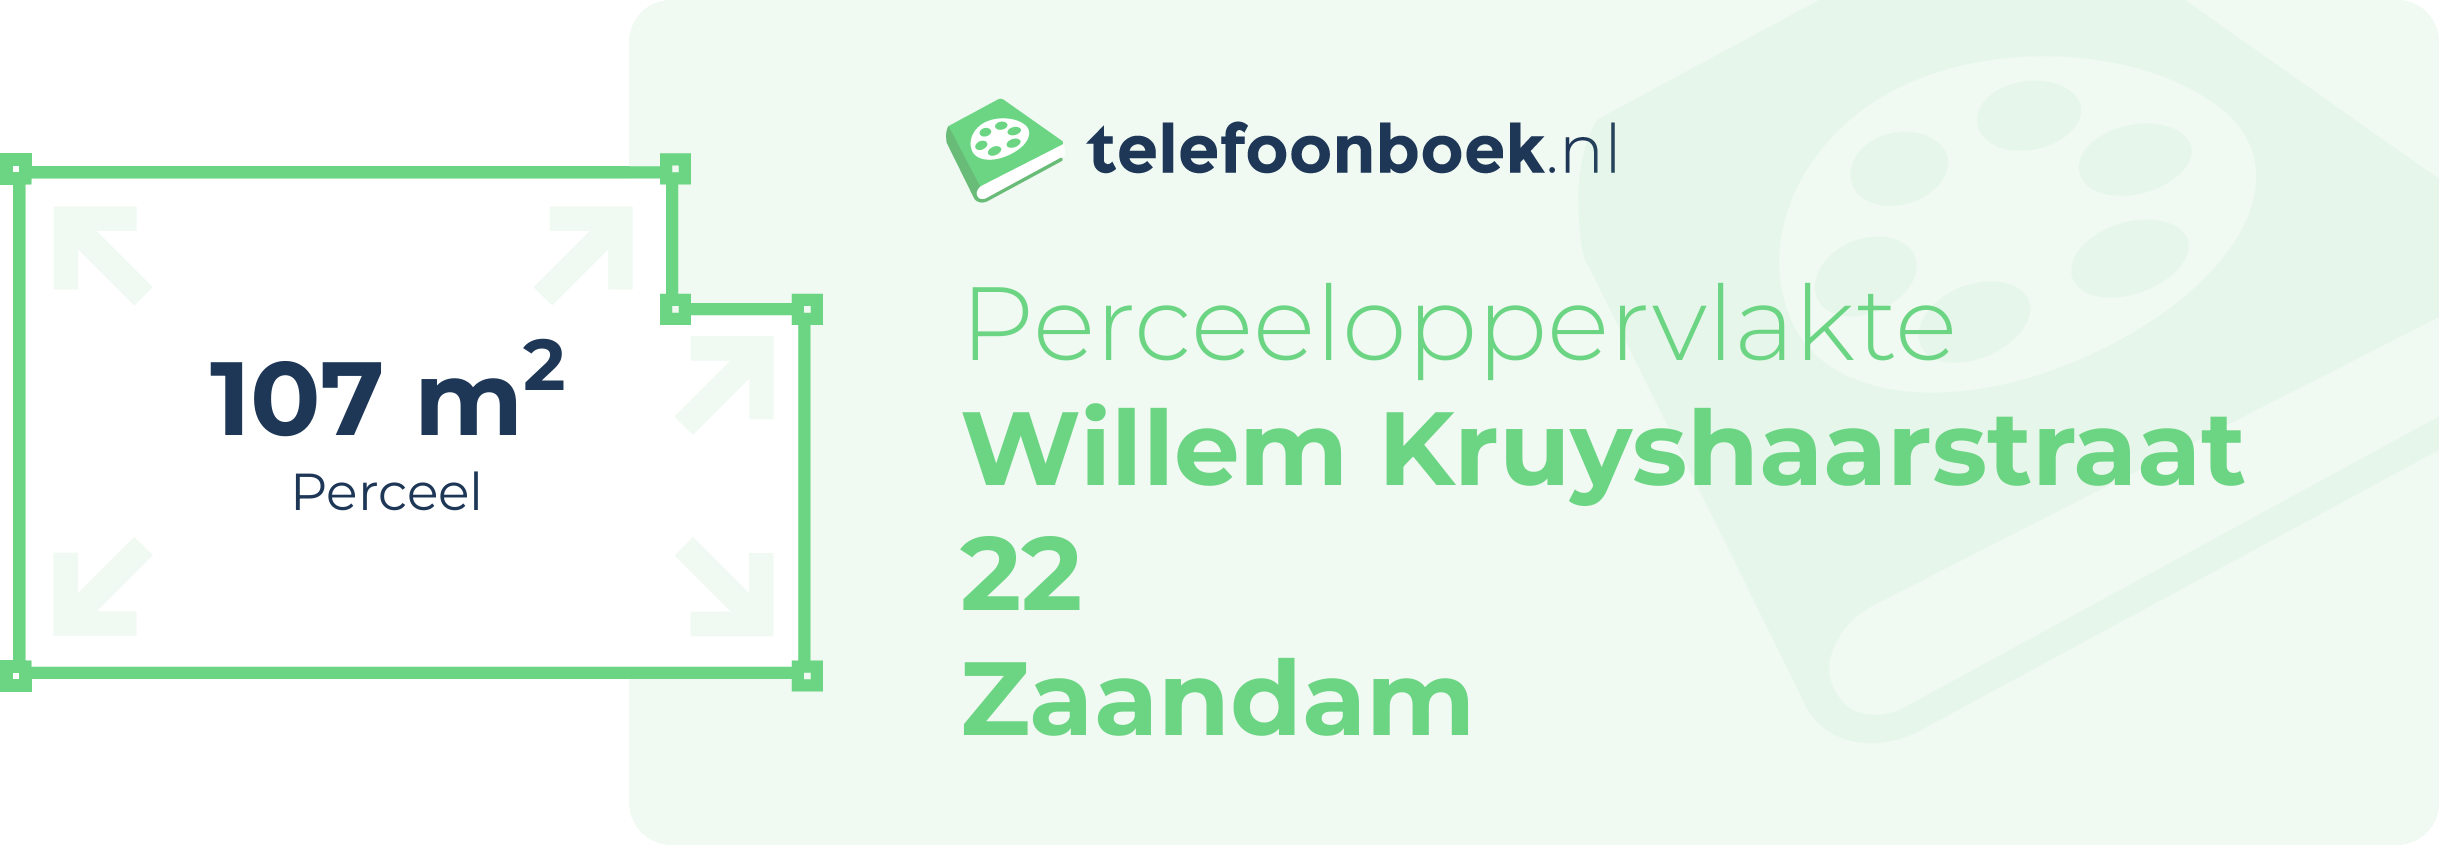 Perceeloppervlakte Willem Kruyshaarstraat 22 Zaandam